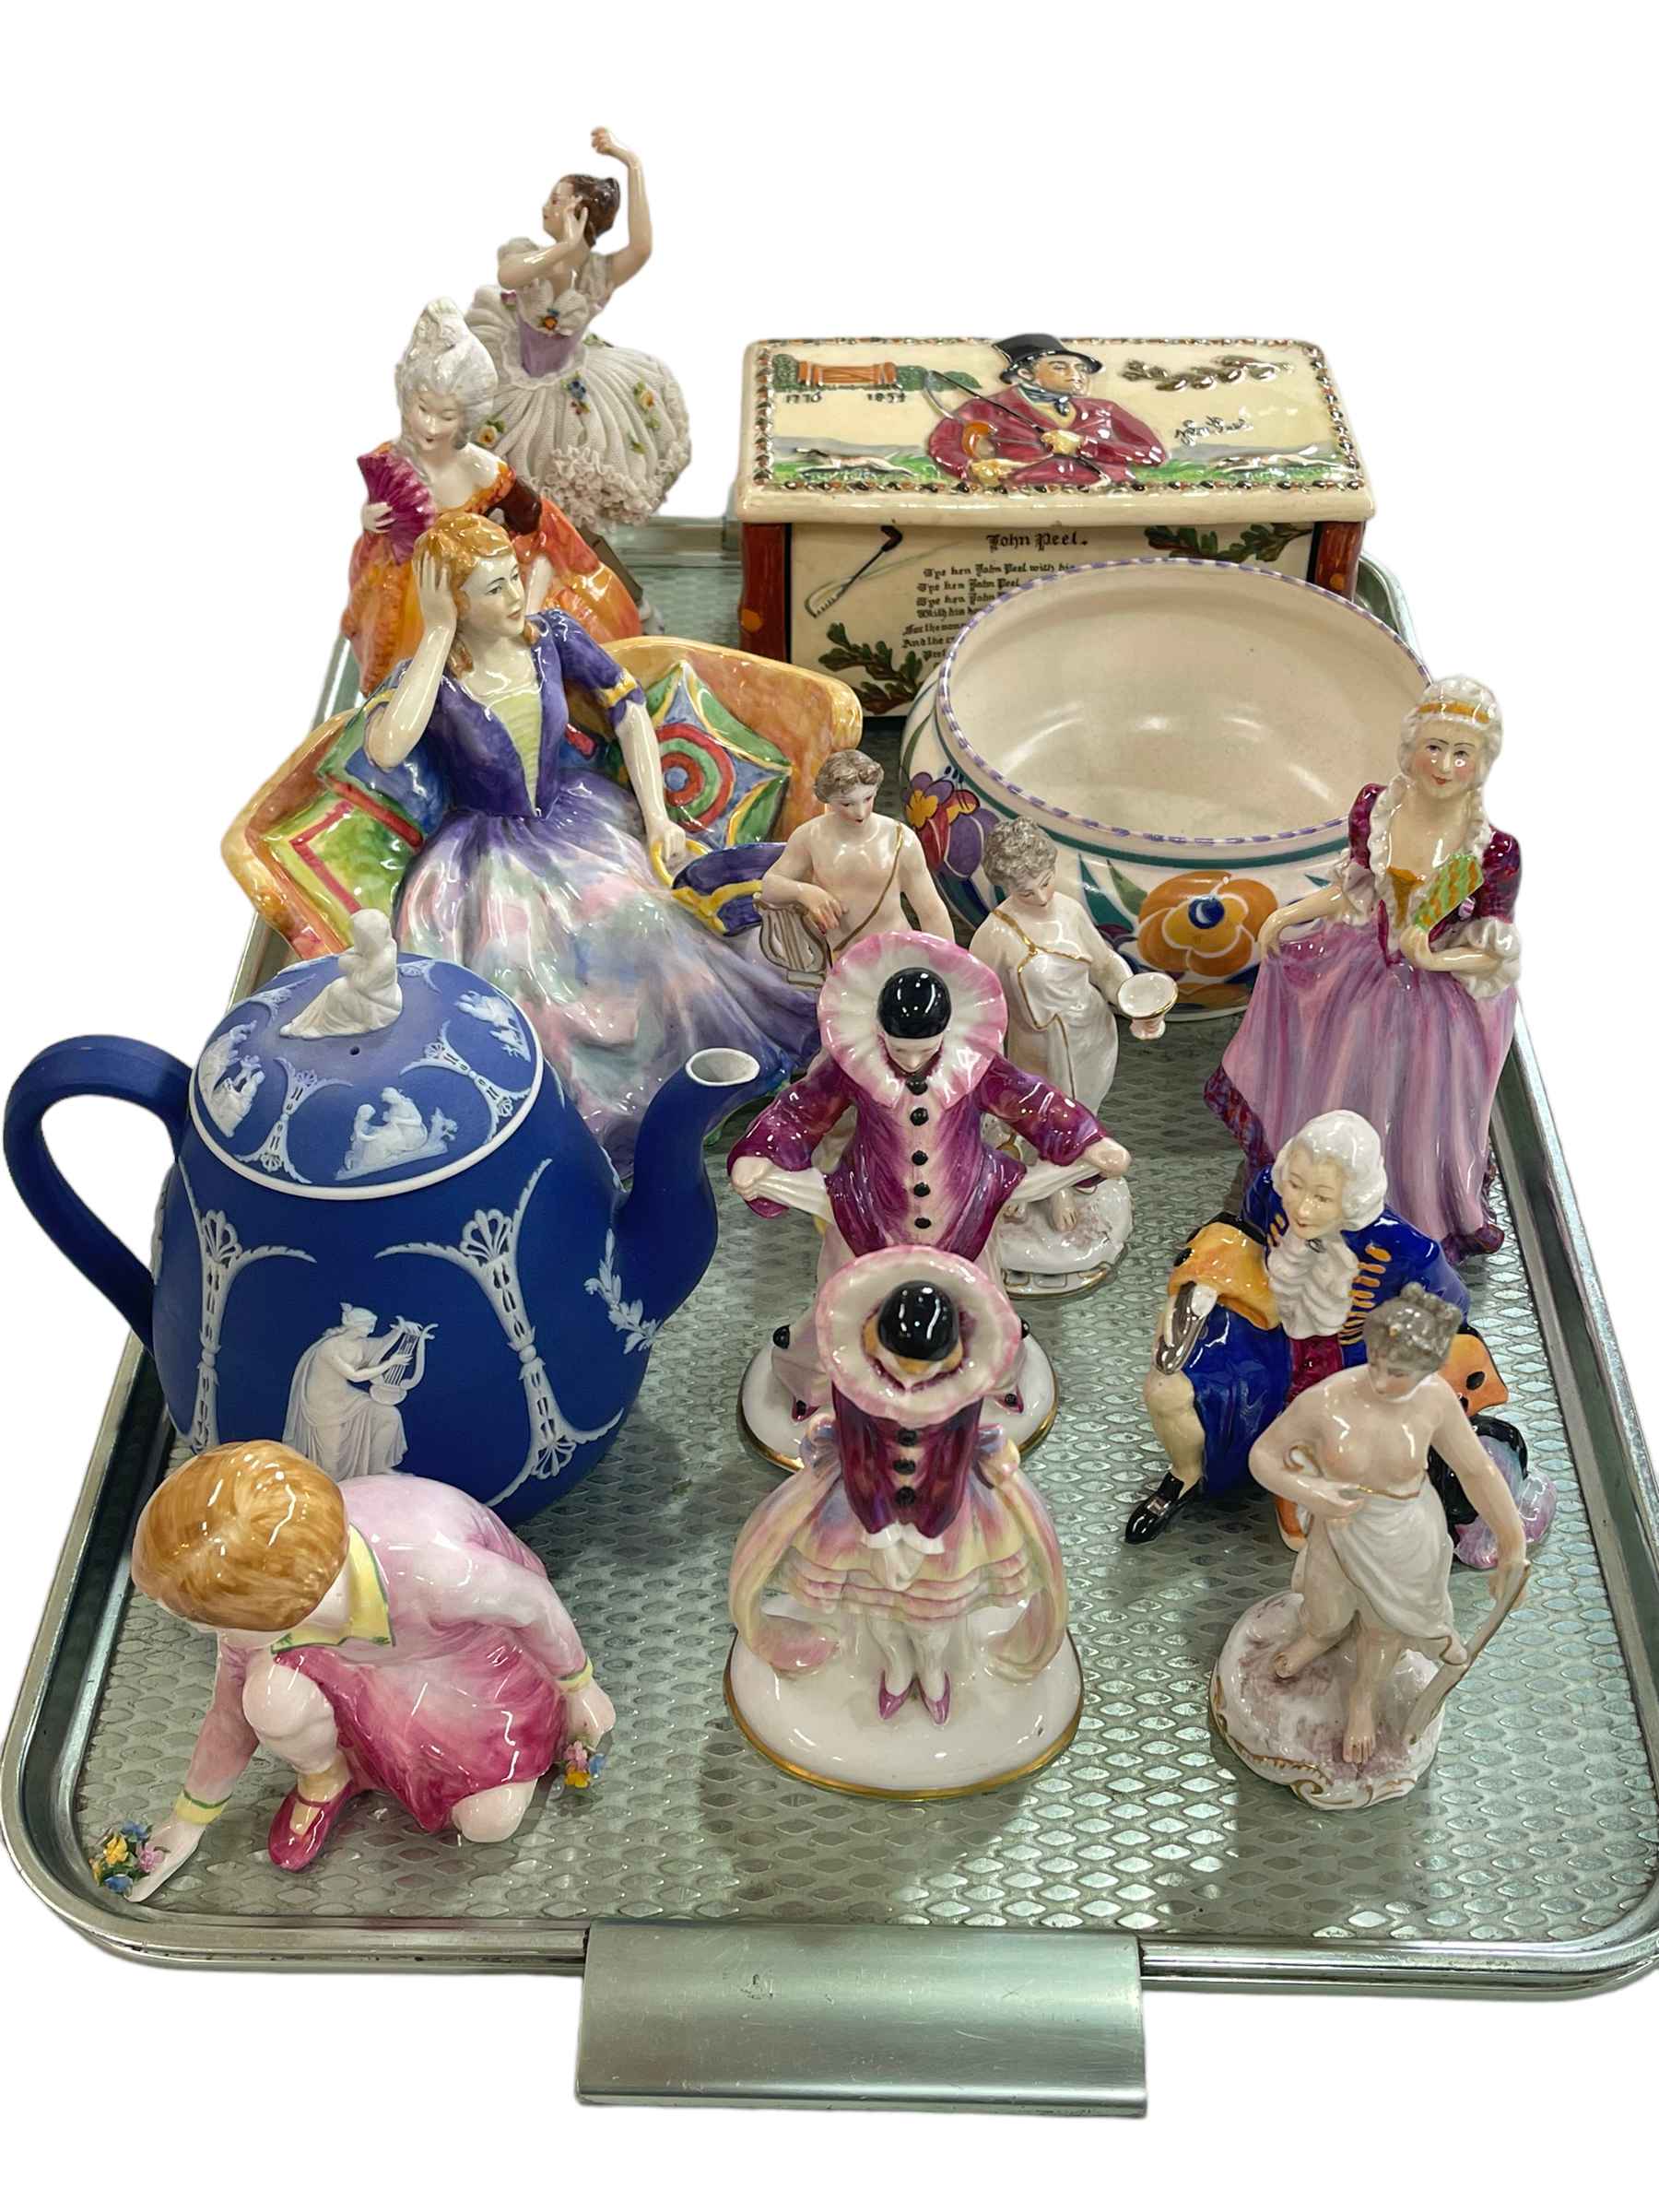 Crown Devon John Peel musical box, assorted figurines, Poole bowl, Wedgwood Blue Jasperware teapot,